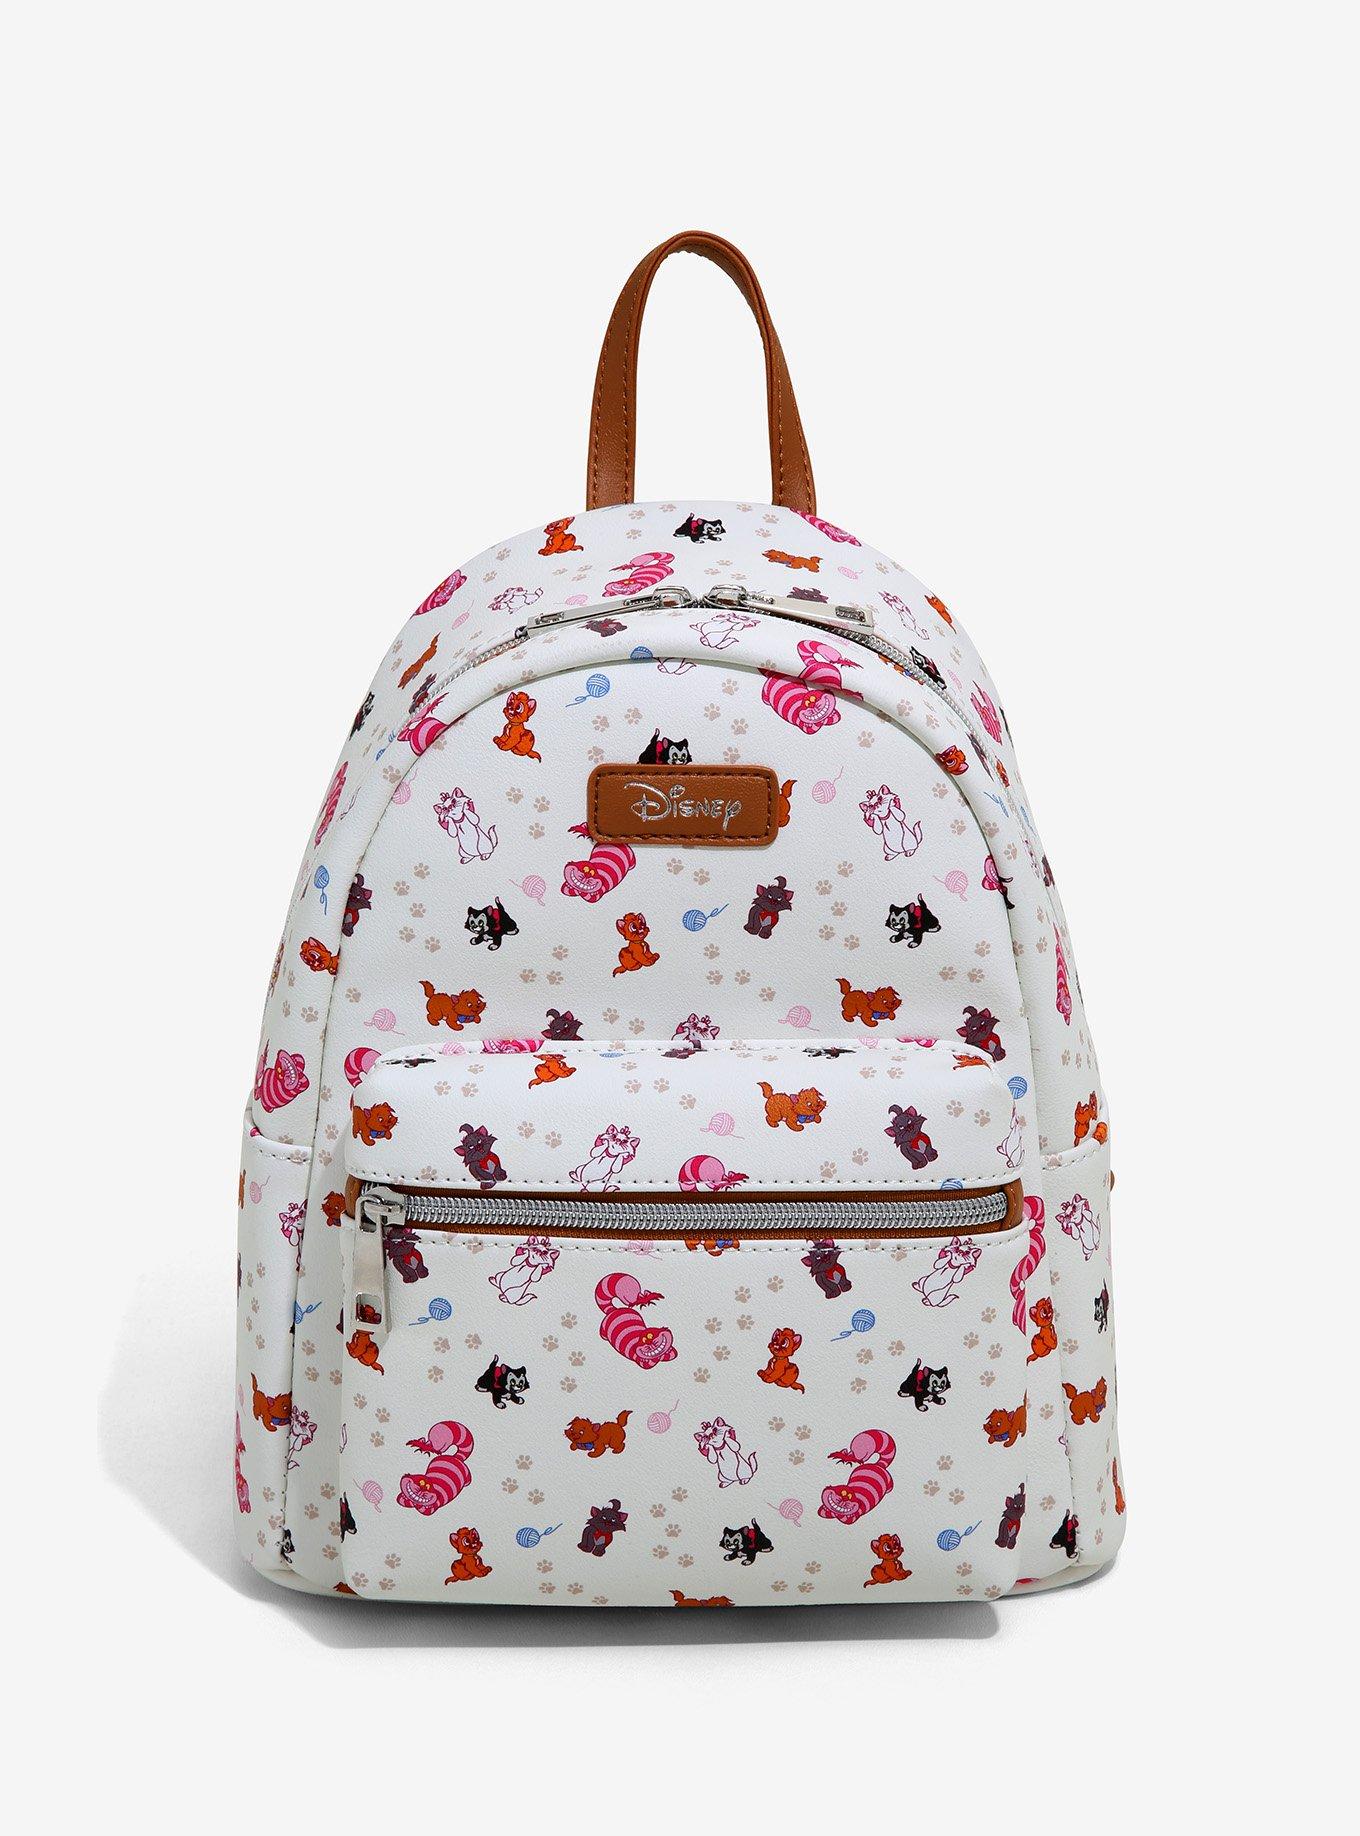 Loungefly Disney Cats Mini Backpack